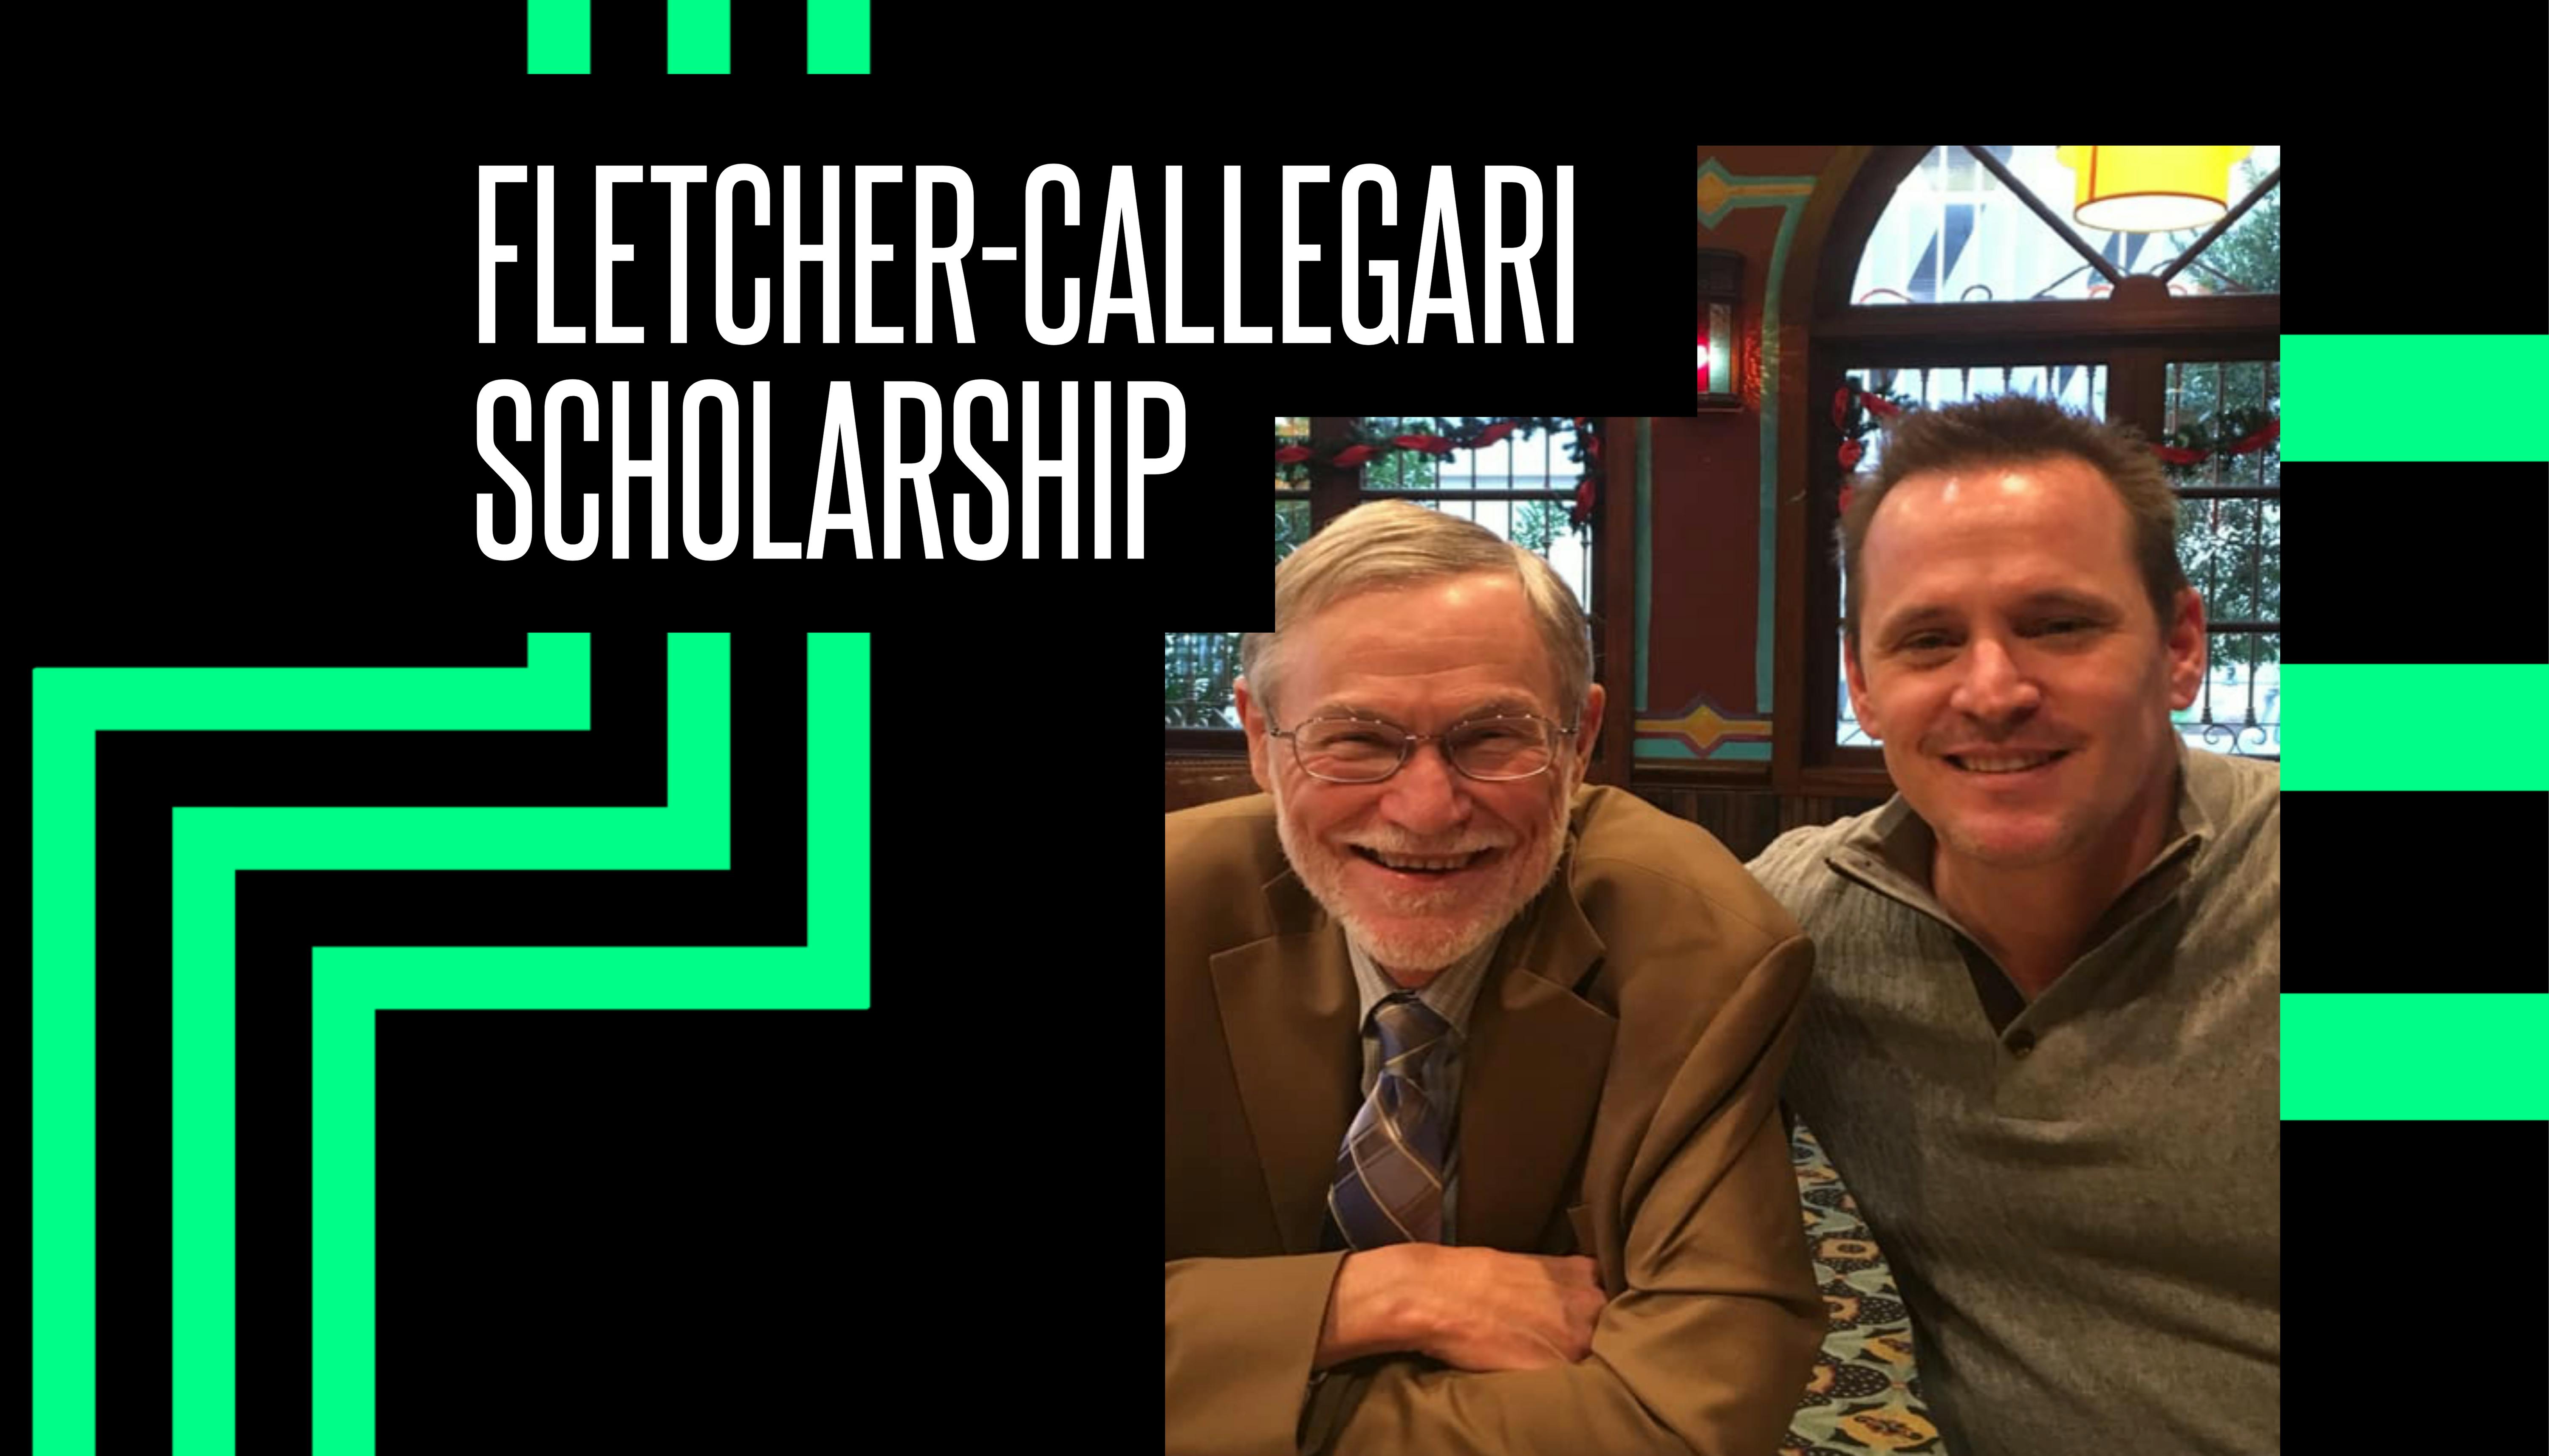 Fletcher-Callegari Scholarship cover image